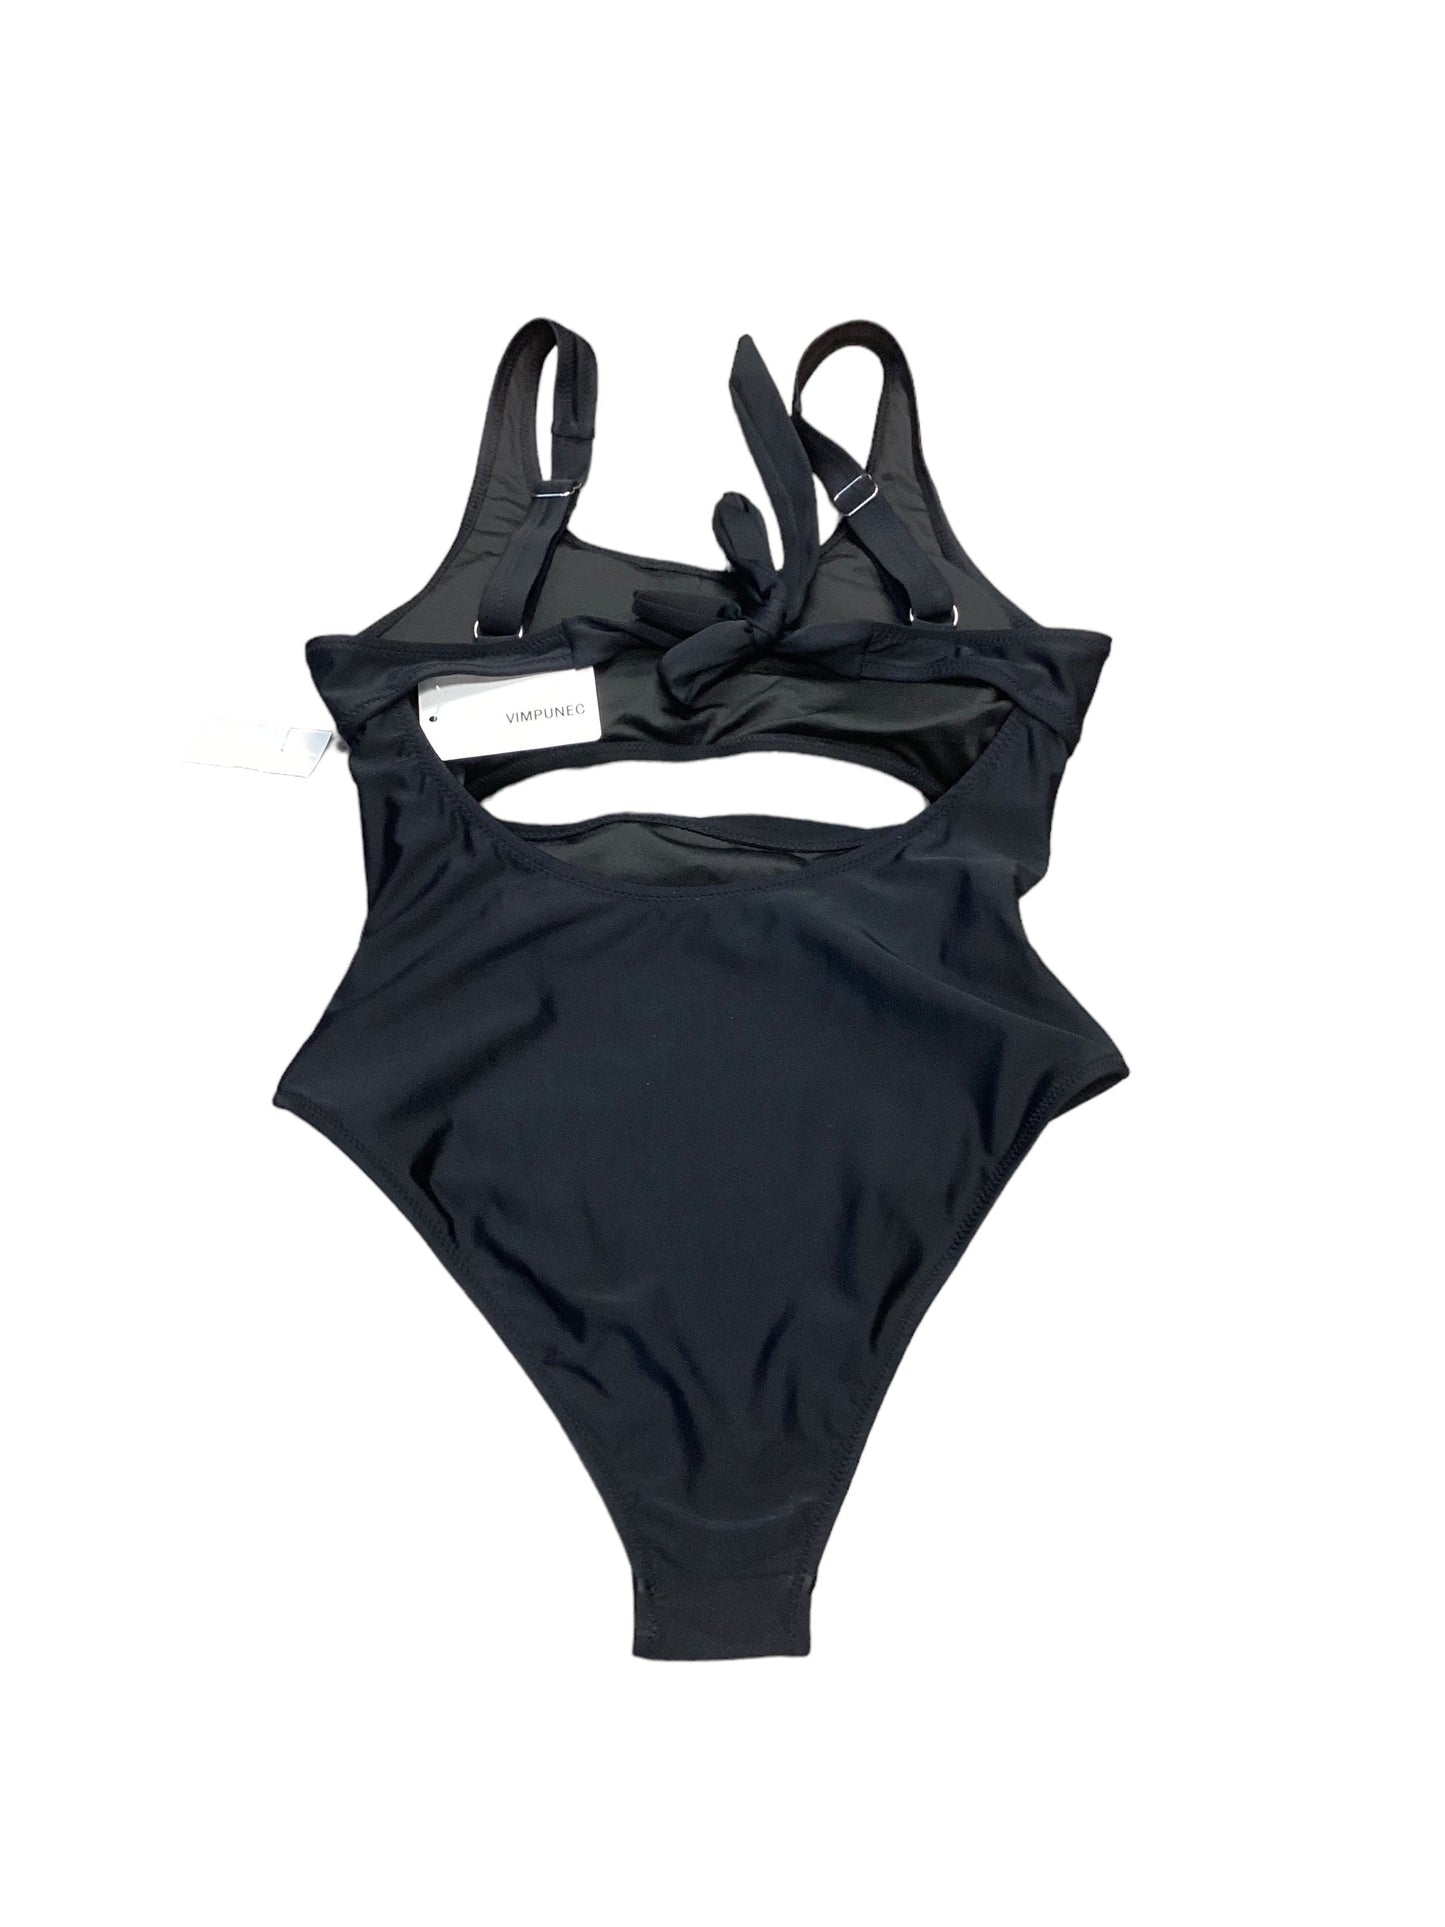 Black Swimsuit Clothes Mentor, Size S